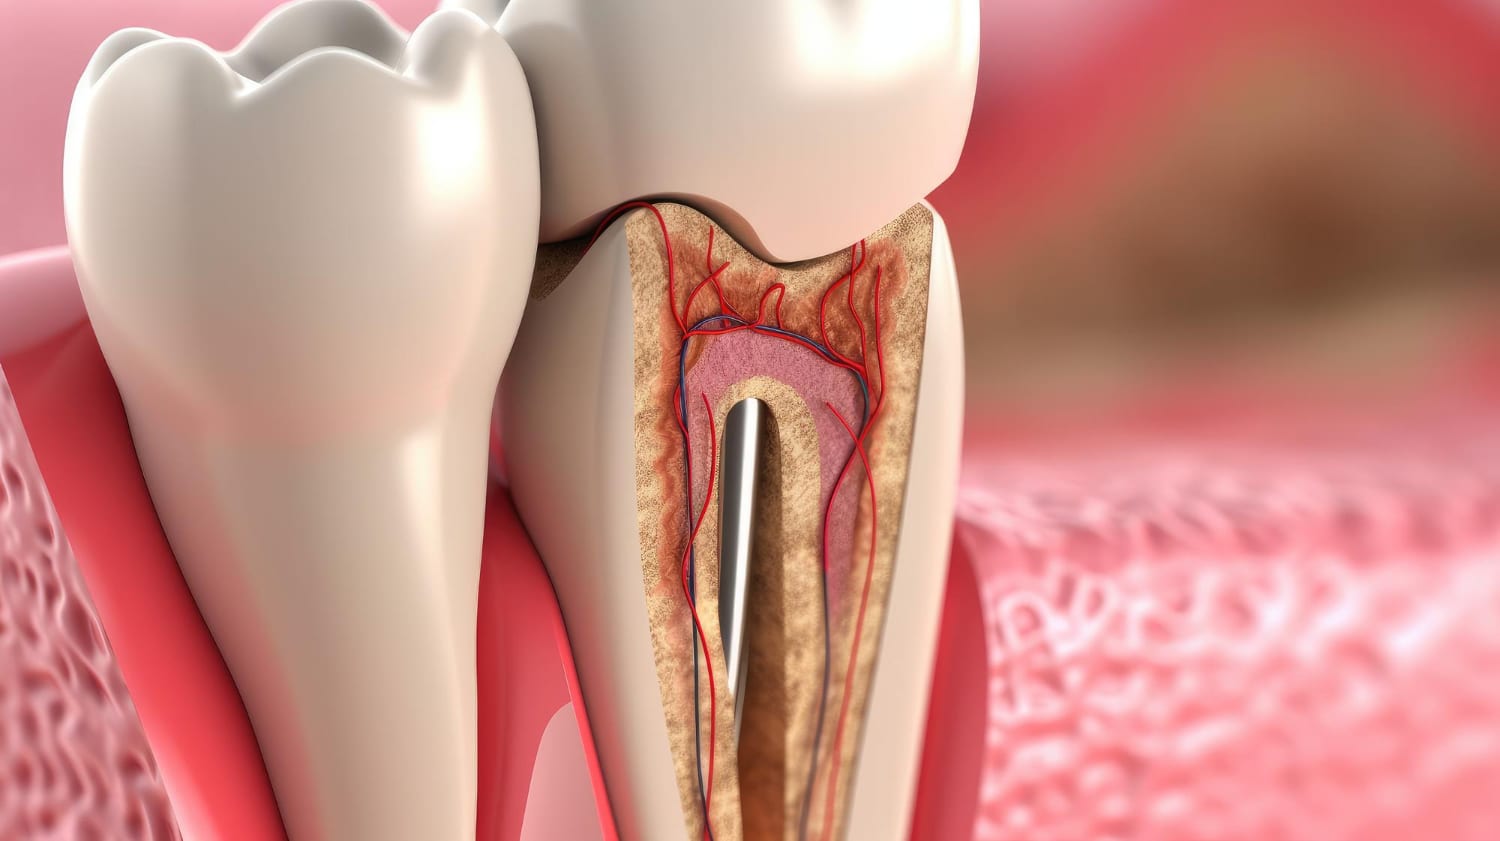 diseases-teeth-inflammation-dental-canals-dentistry-prosthetics-dental-surgery